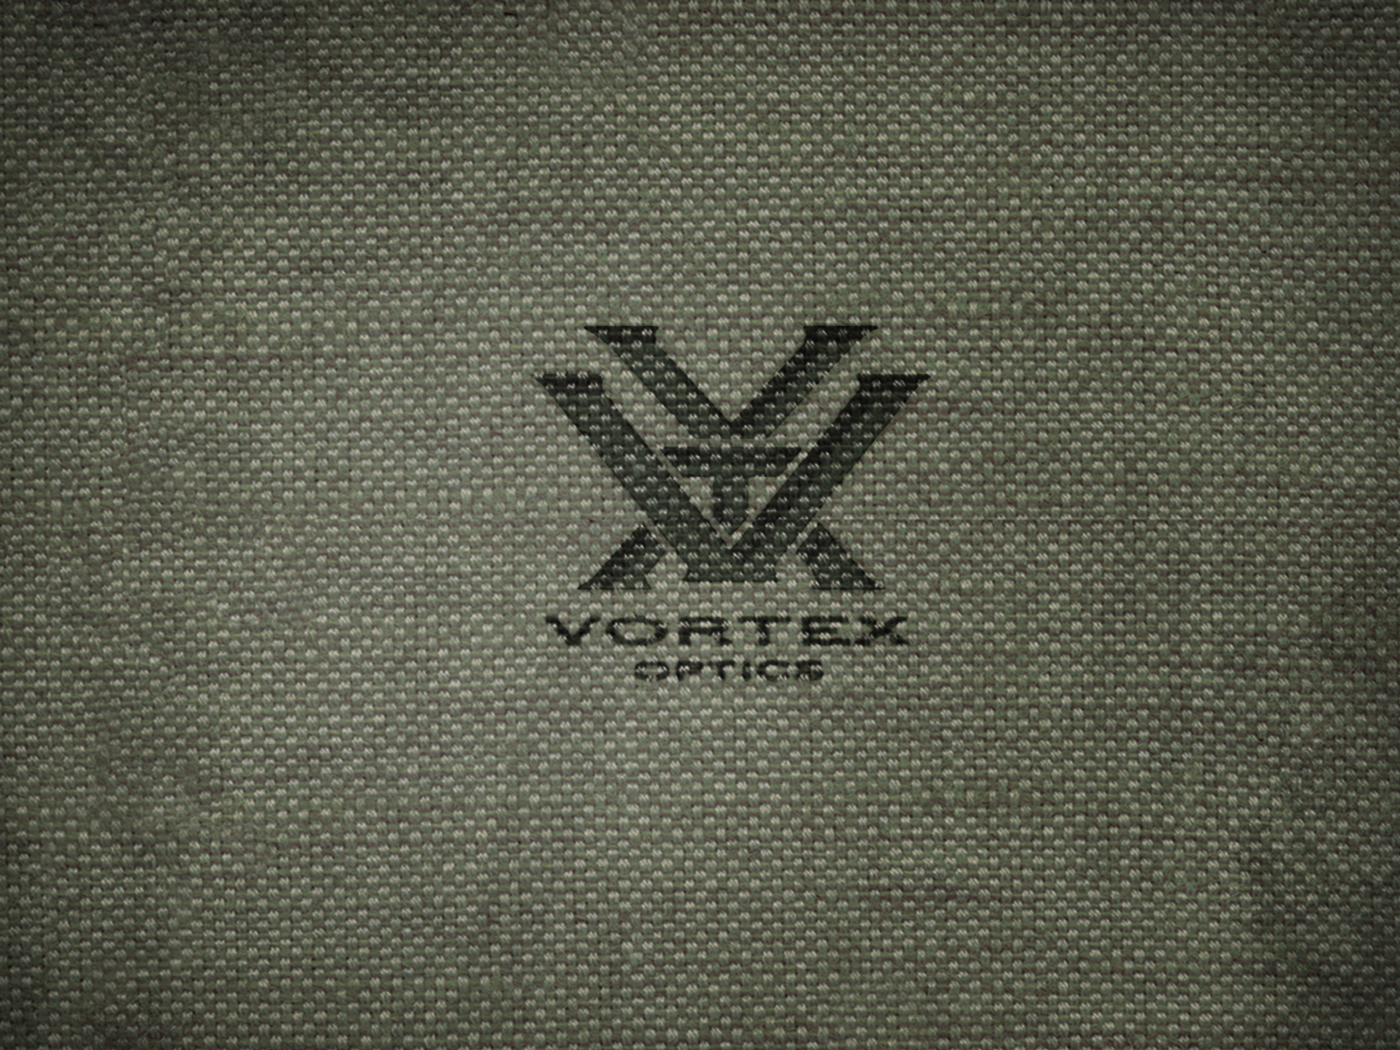 Vortex Optics Desktop Wallpaper